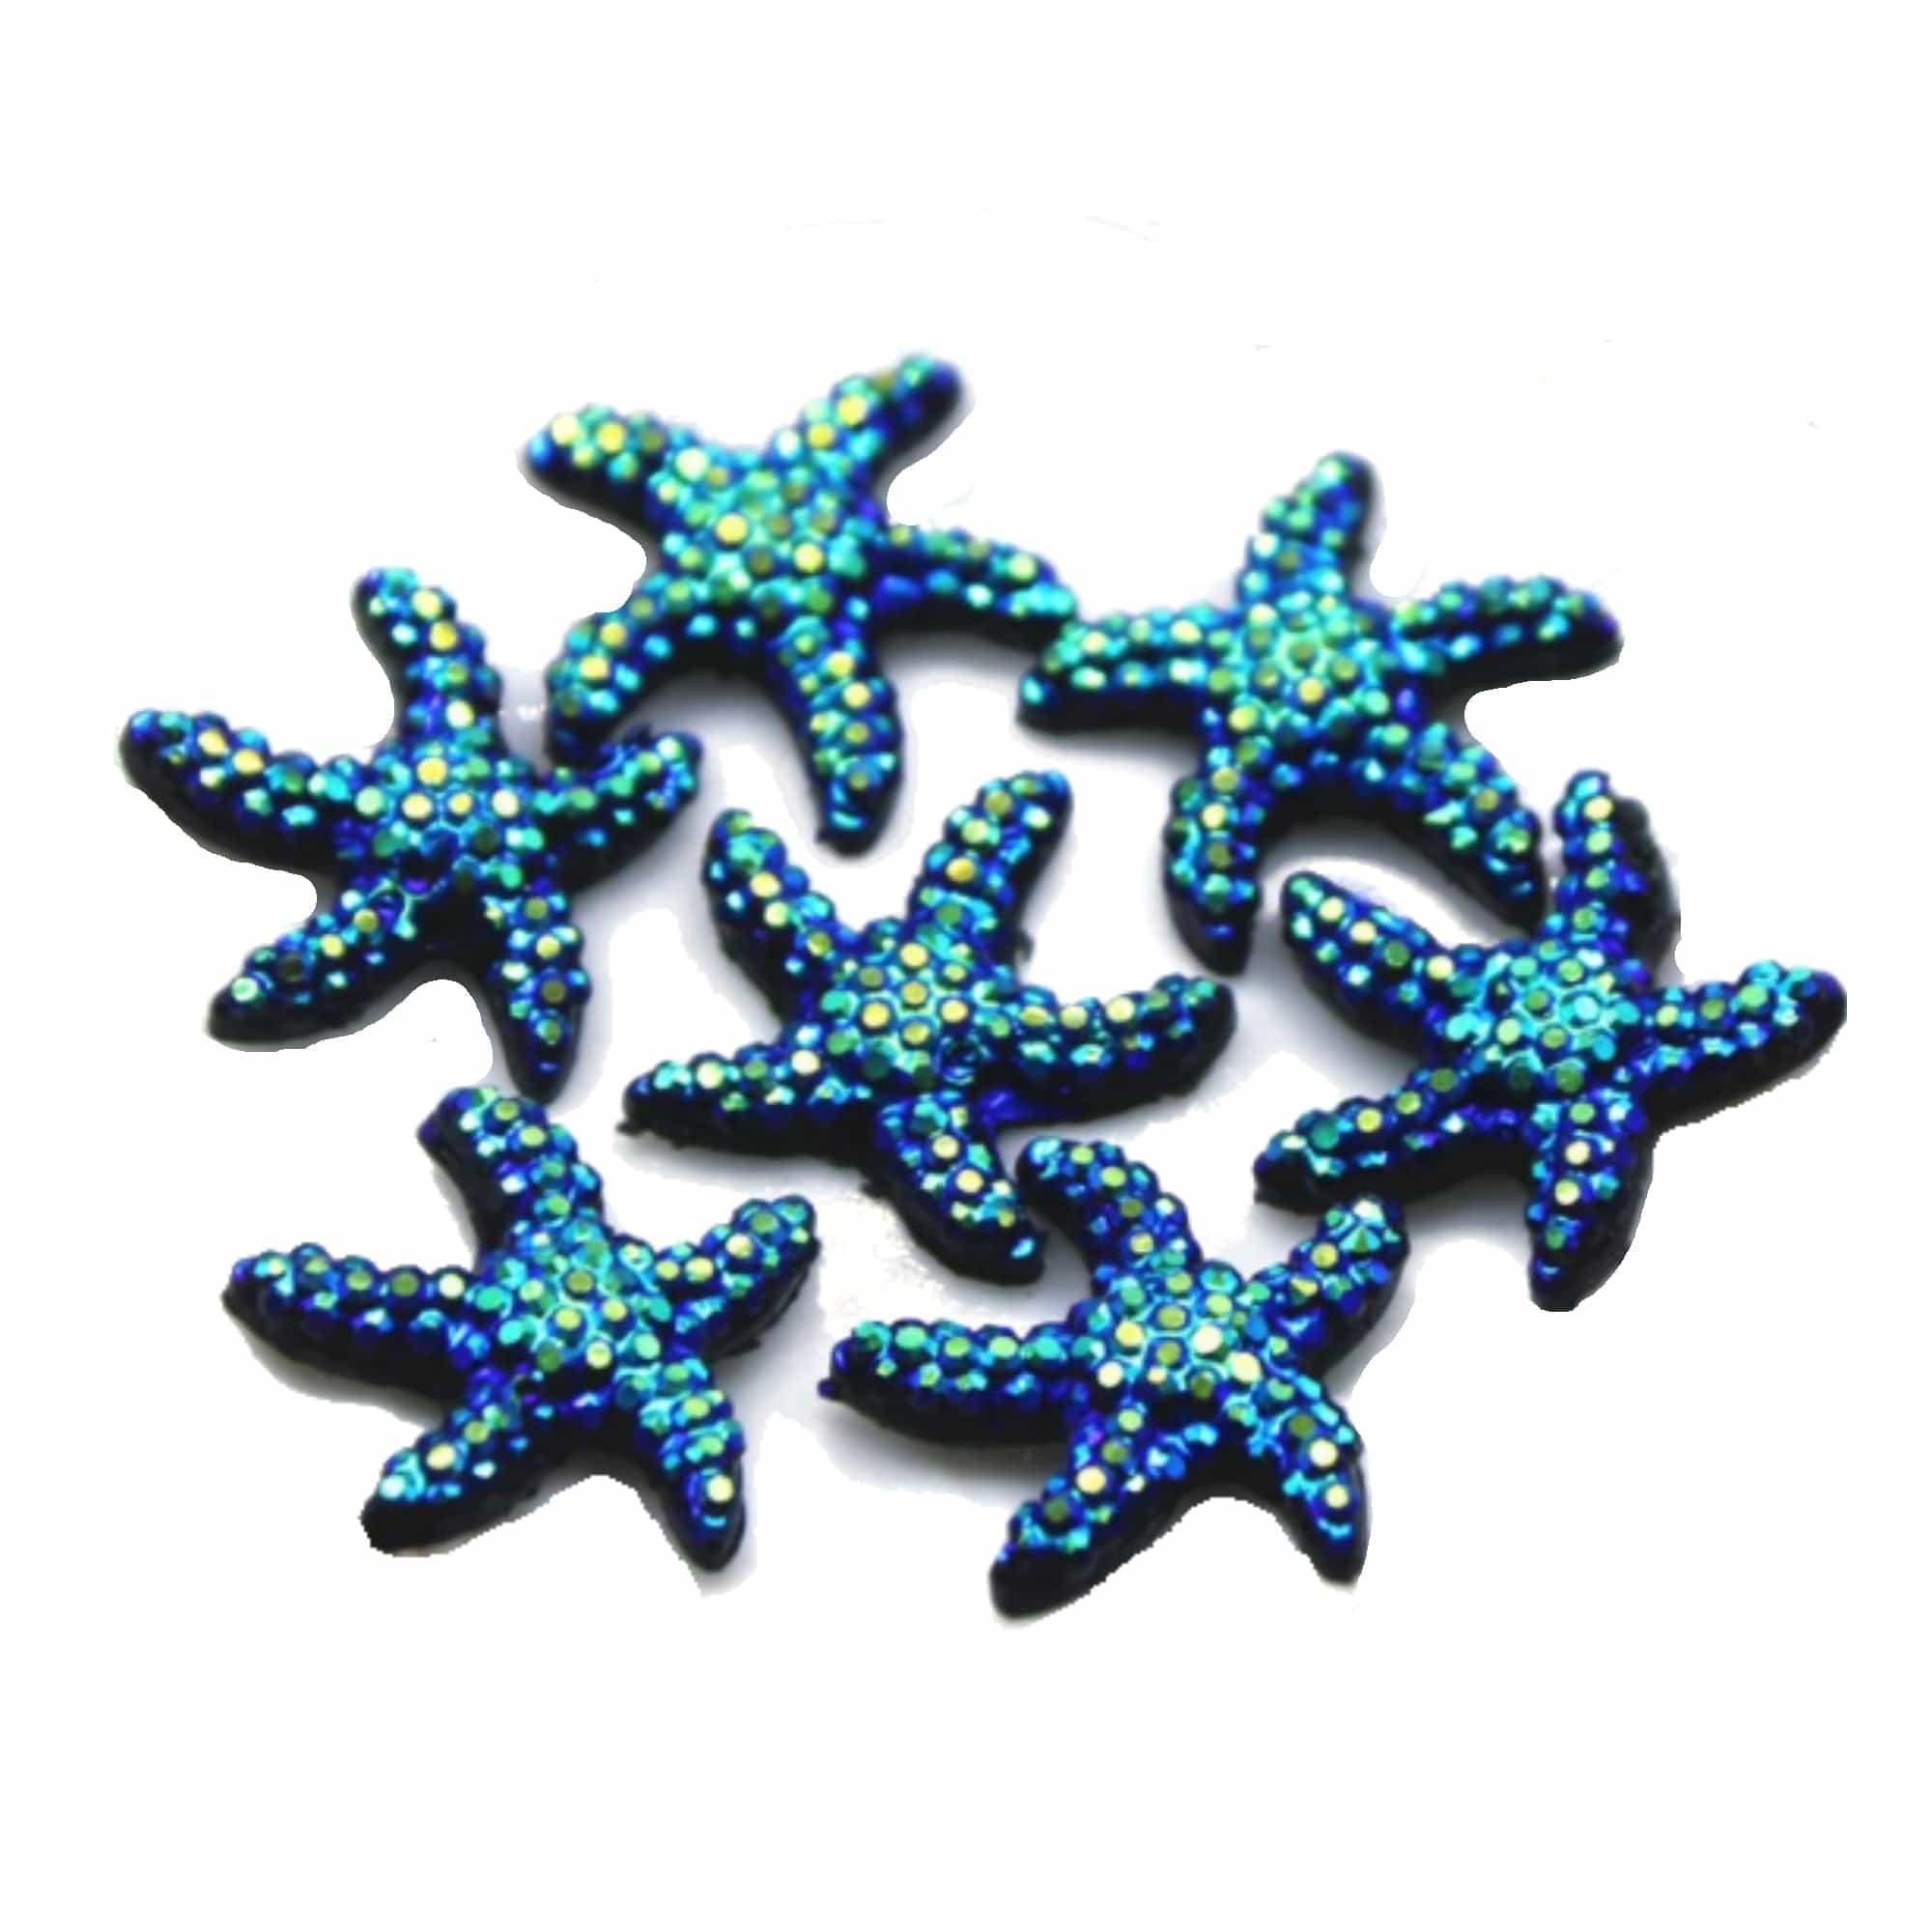 Peacock Blue Sea Stars Resin Flatback Scrapbook Embellishments by SSC Designs - 10 pieces - Scrapbook Supply Companies